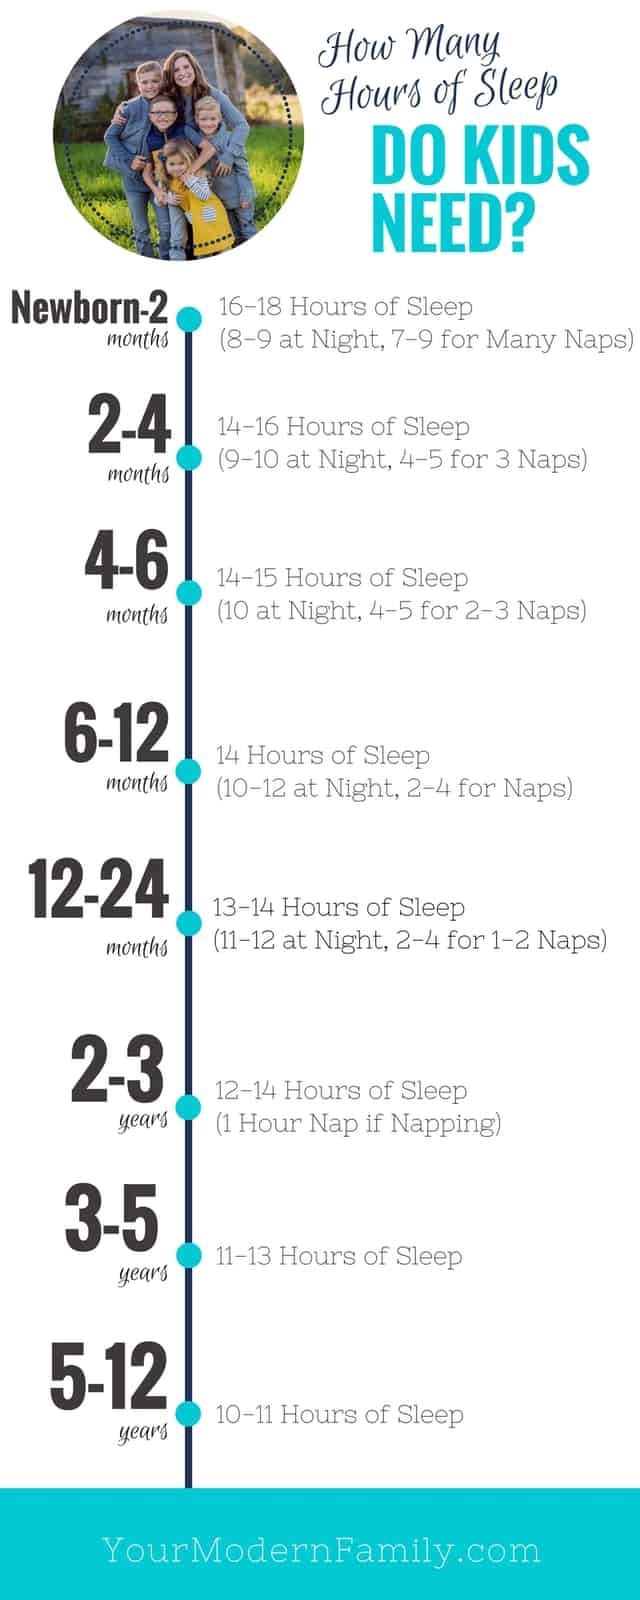 Sheet on how many hours of sleep children need.